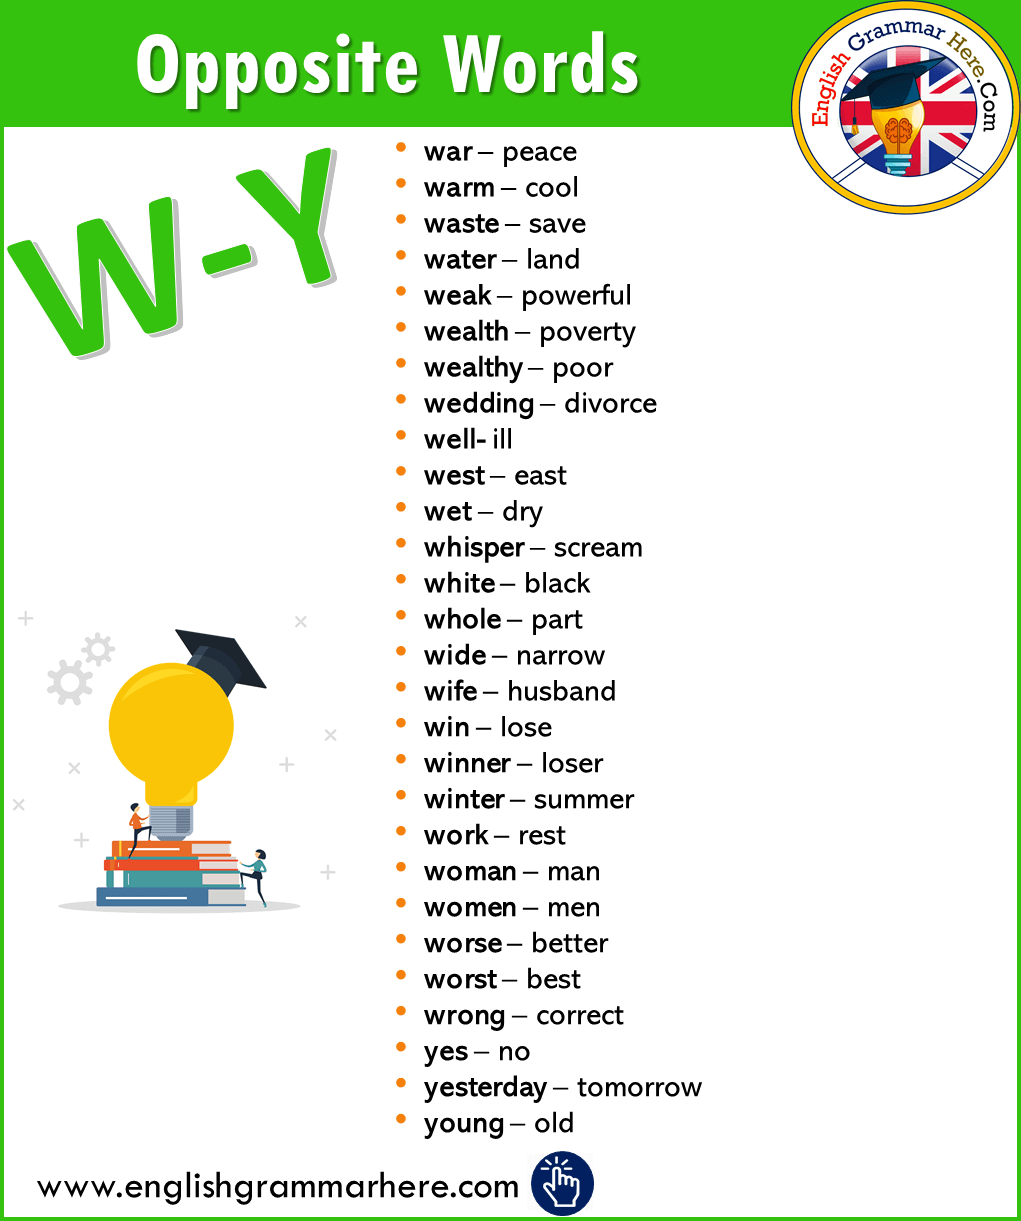 Alphabetical Opposite Word List – W, Y